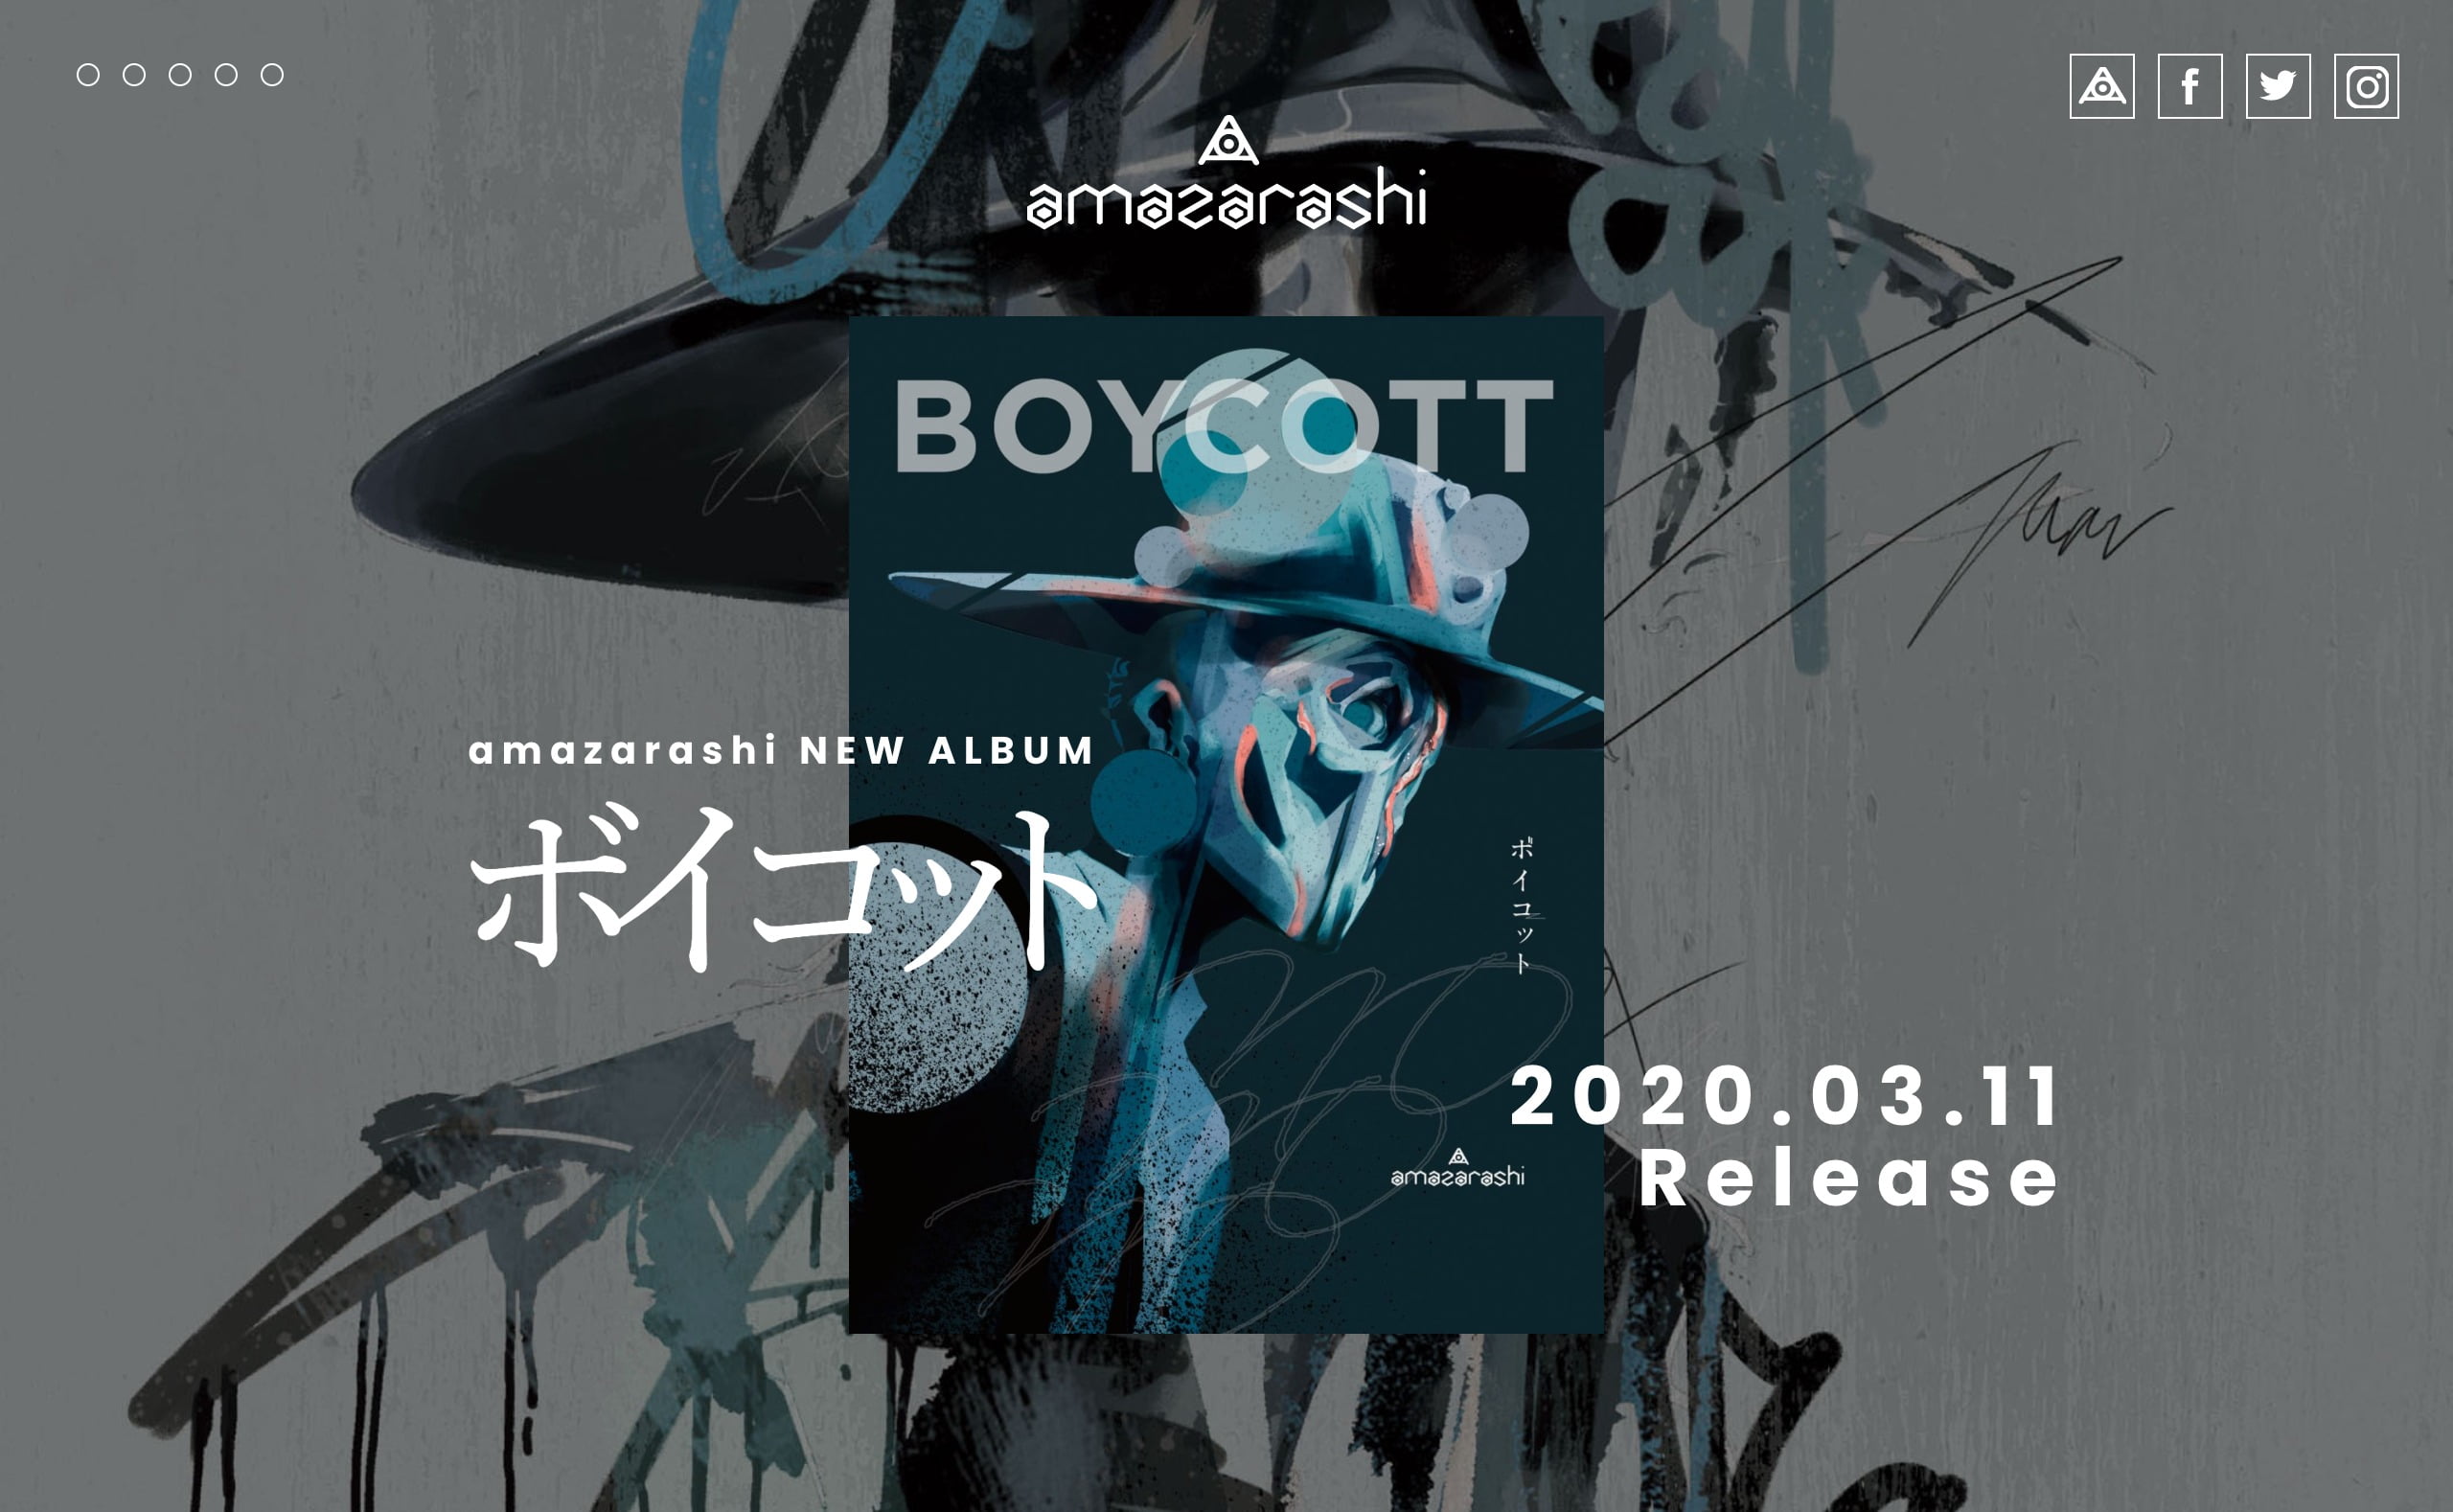 Amazarashi New Album ボイコット 特設サイト Music Web Clips ミュージック ウェブ クリップス